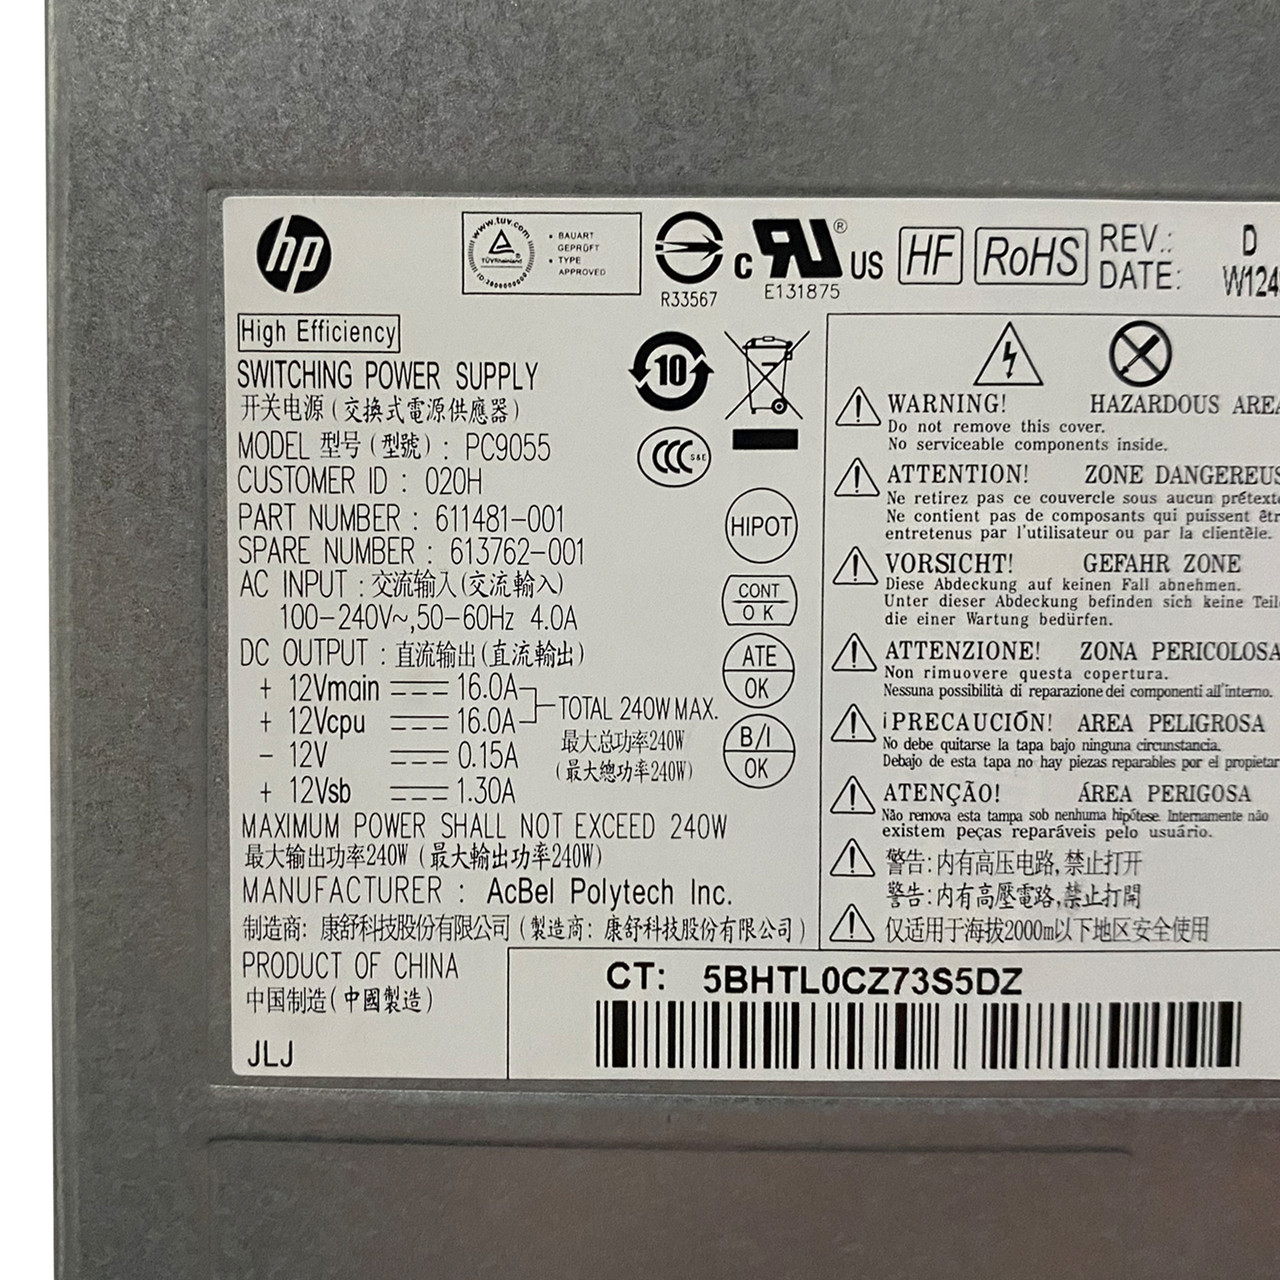 HP 613762-001 6005 SFF 240W Power Supply PC9055 611481-001